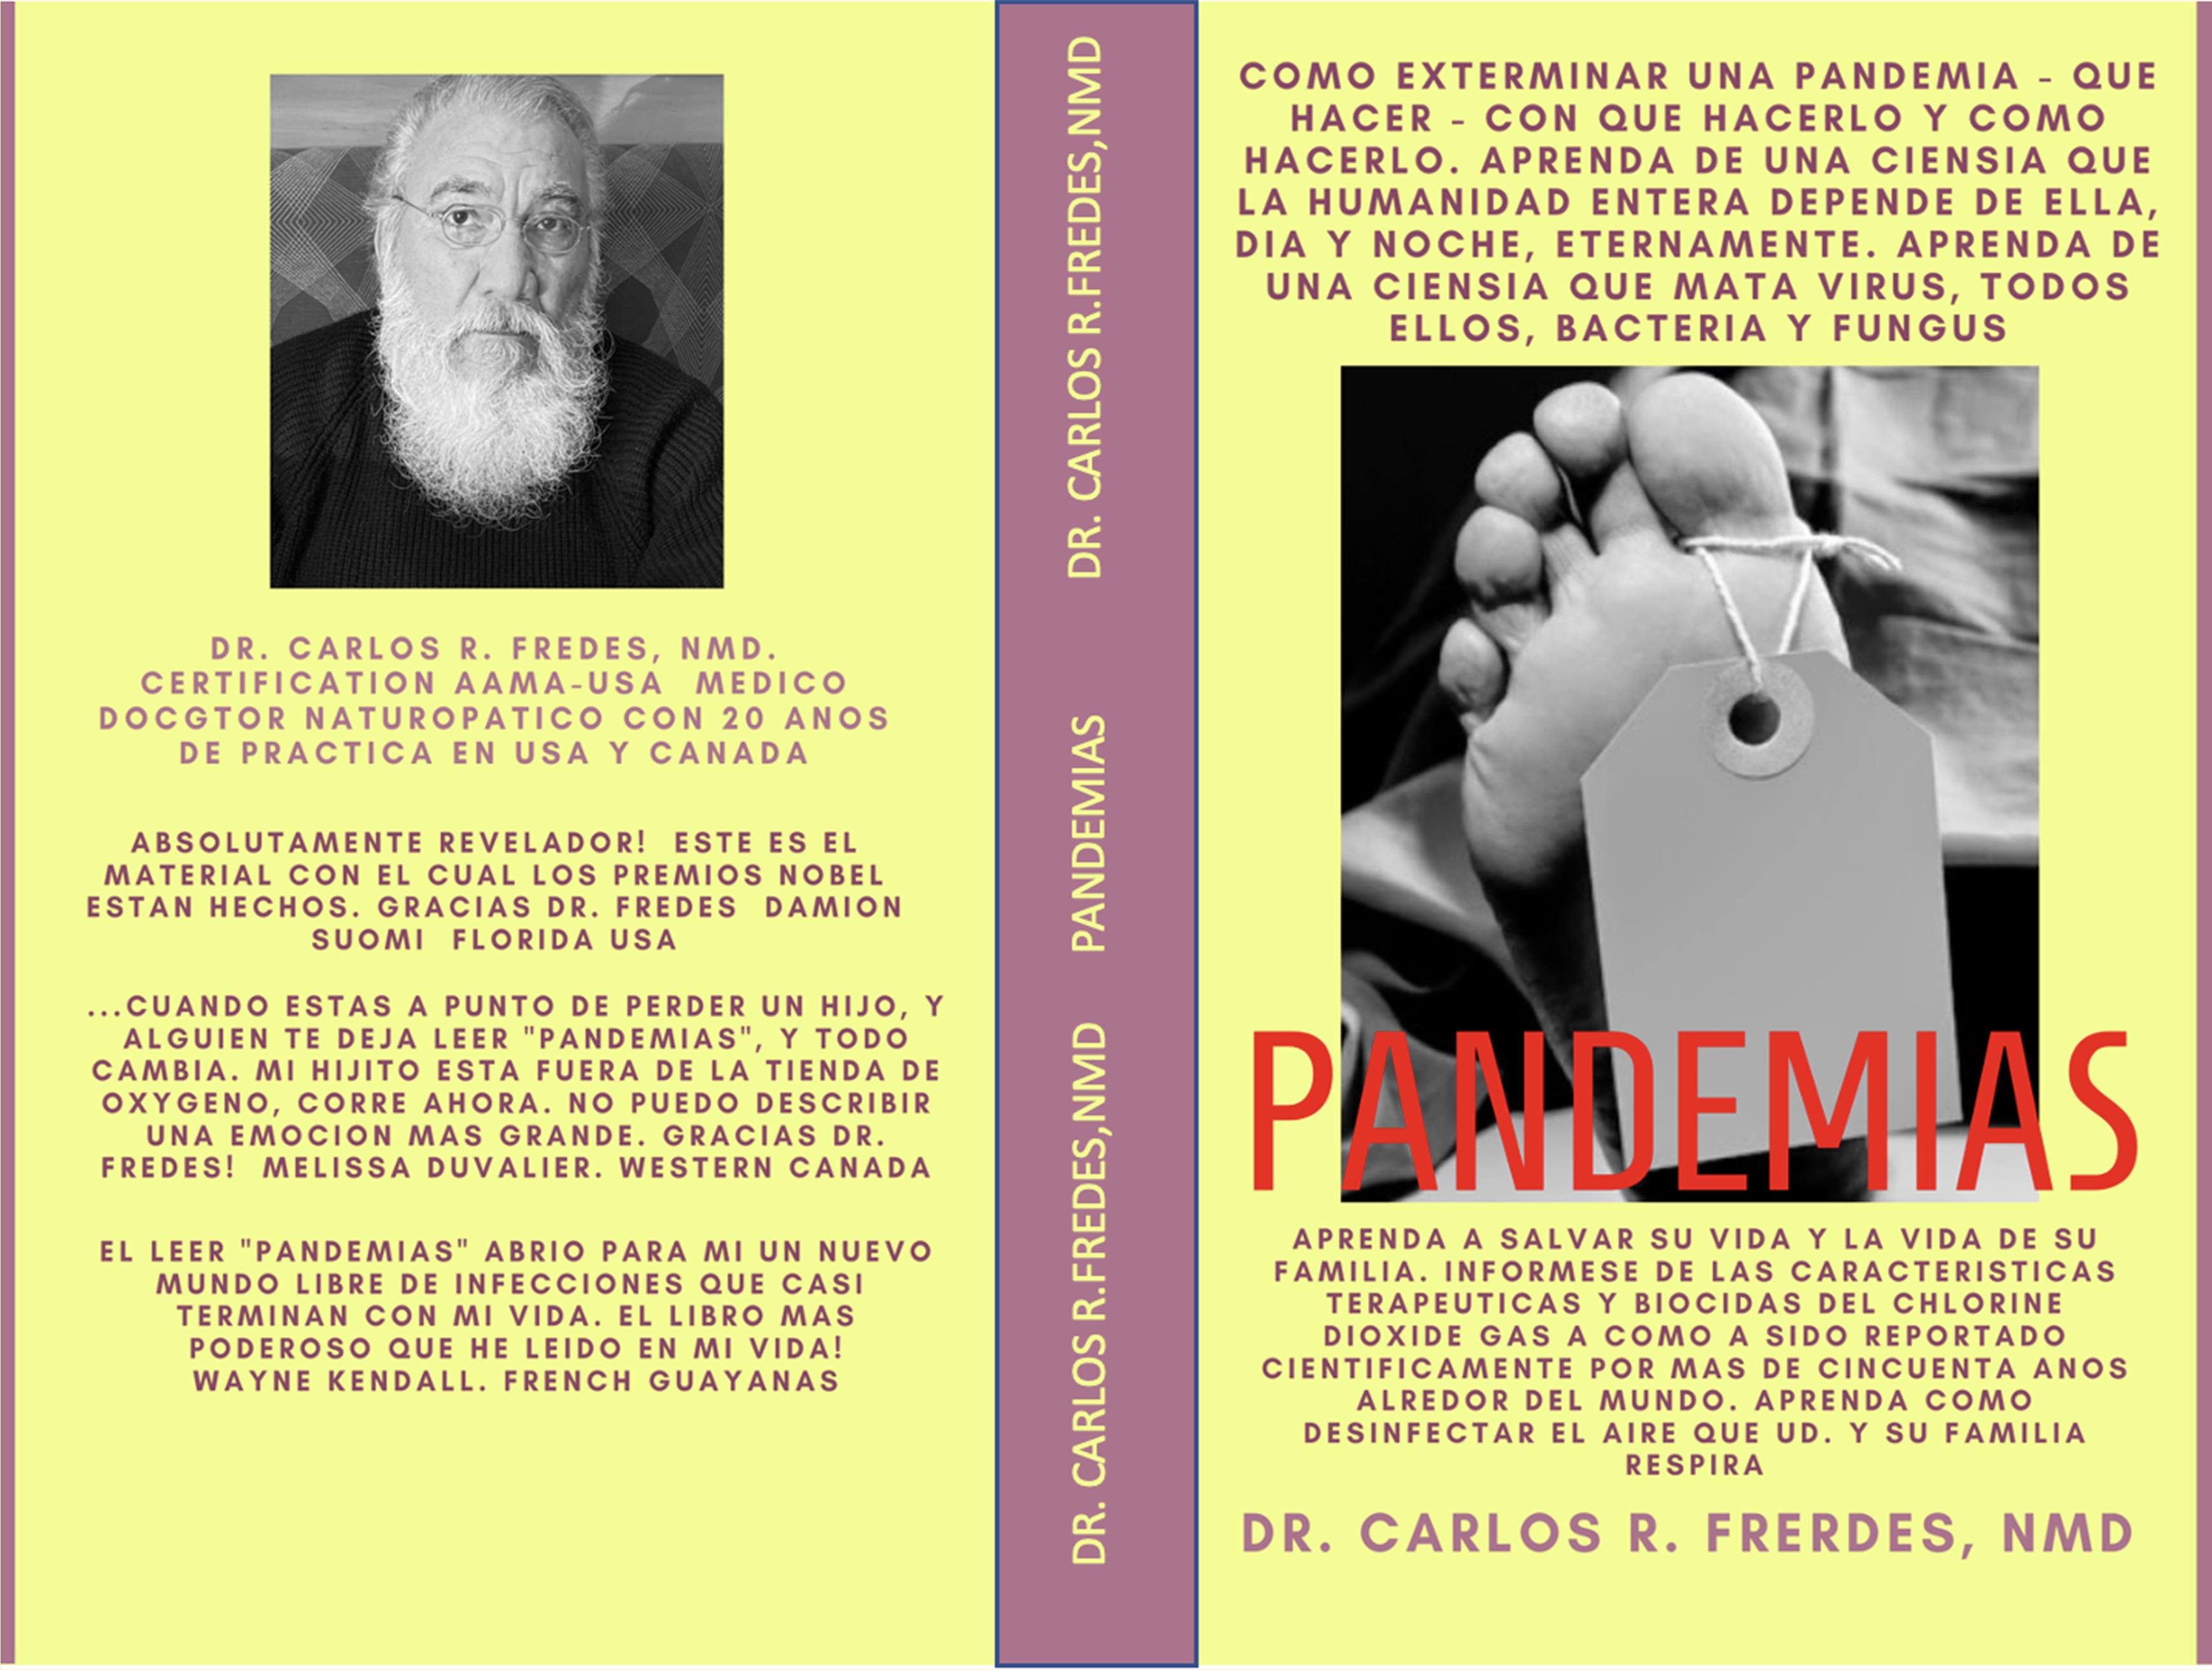 "PANDEMIAS" COMO EXTERMINAR UNA PANDEMIA cover image